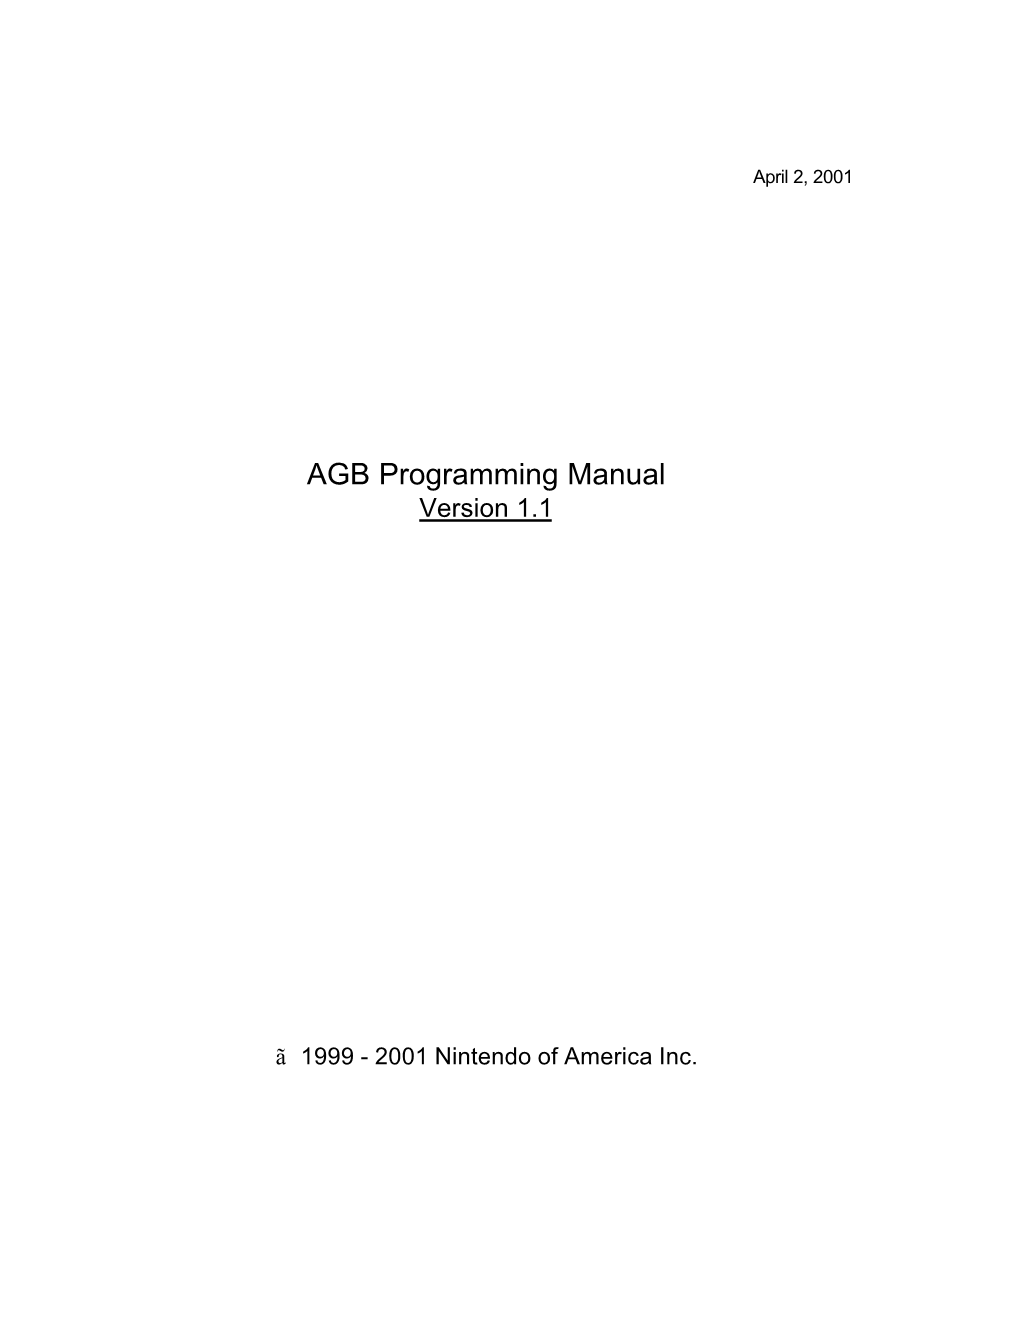 AGB Programming Manual Version 1.1